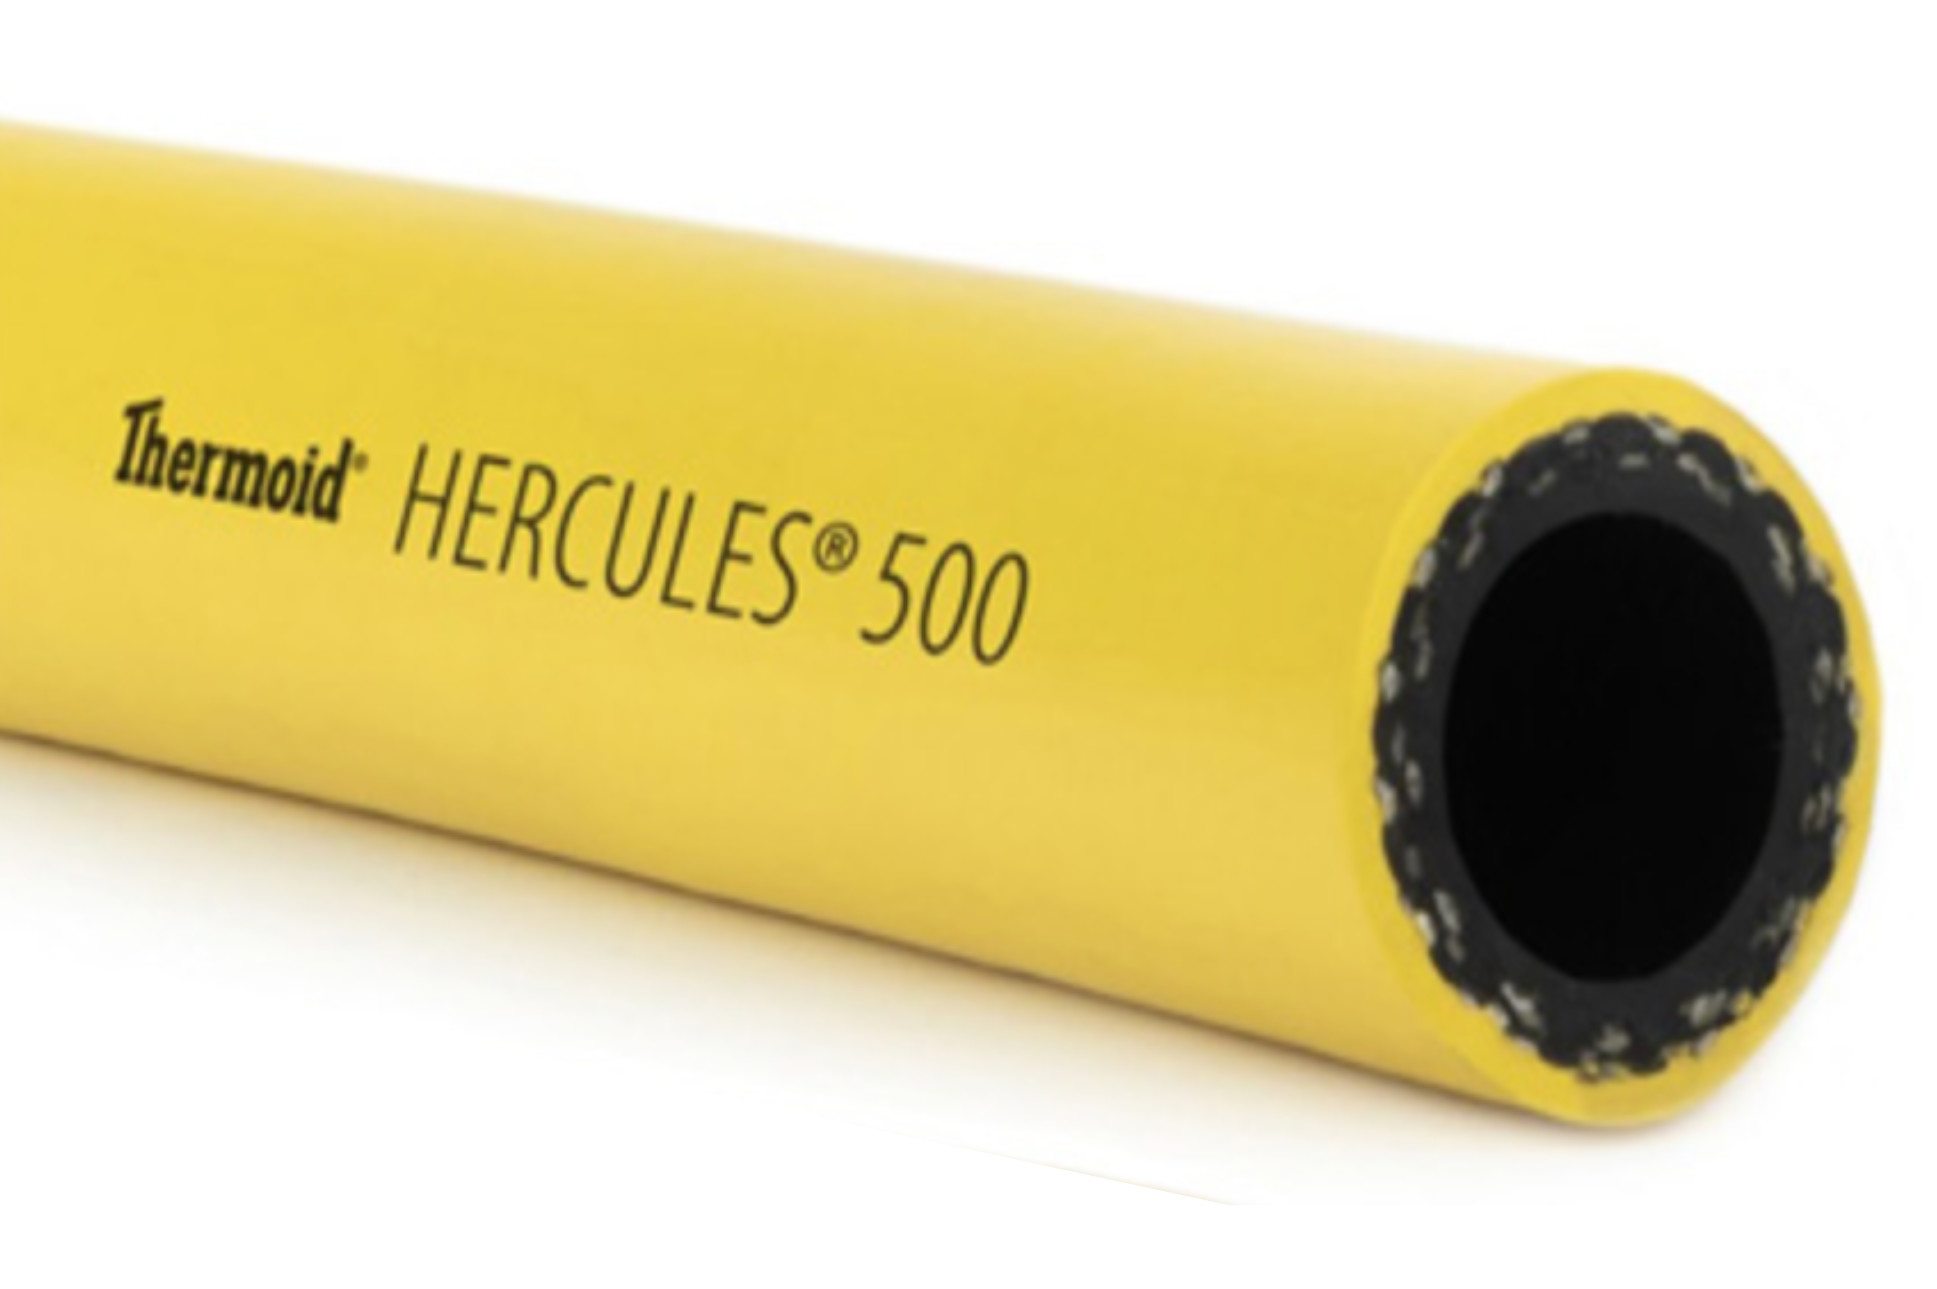 Multipurpose Rubber Hercules 500 Hose